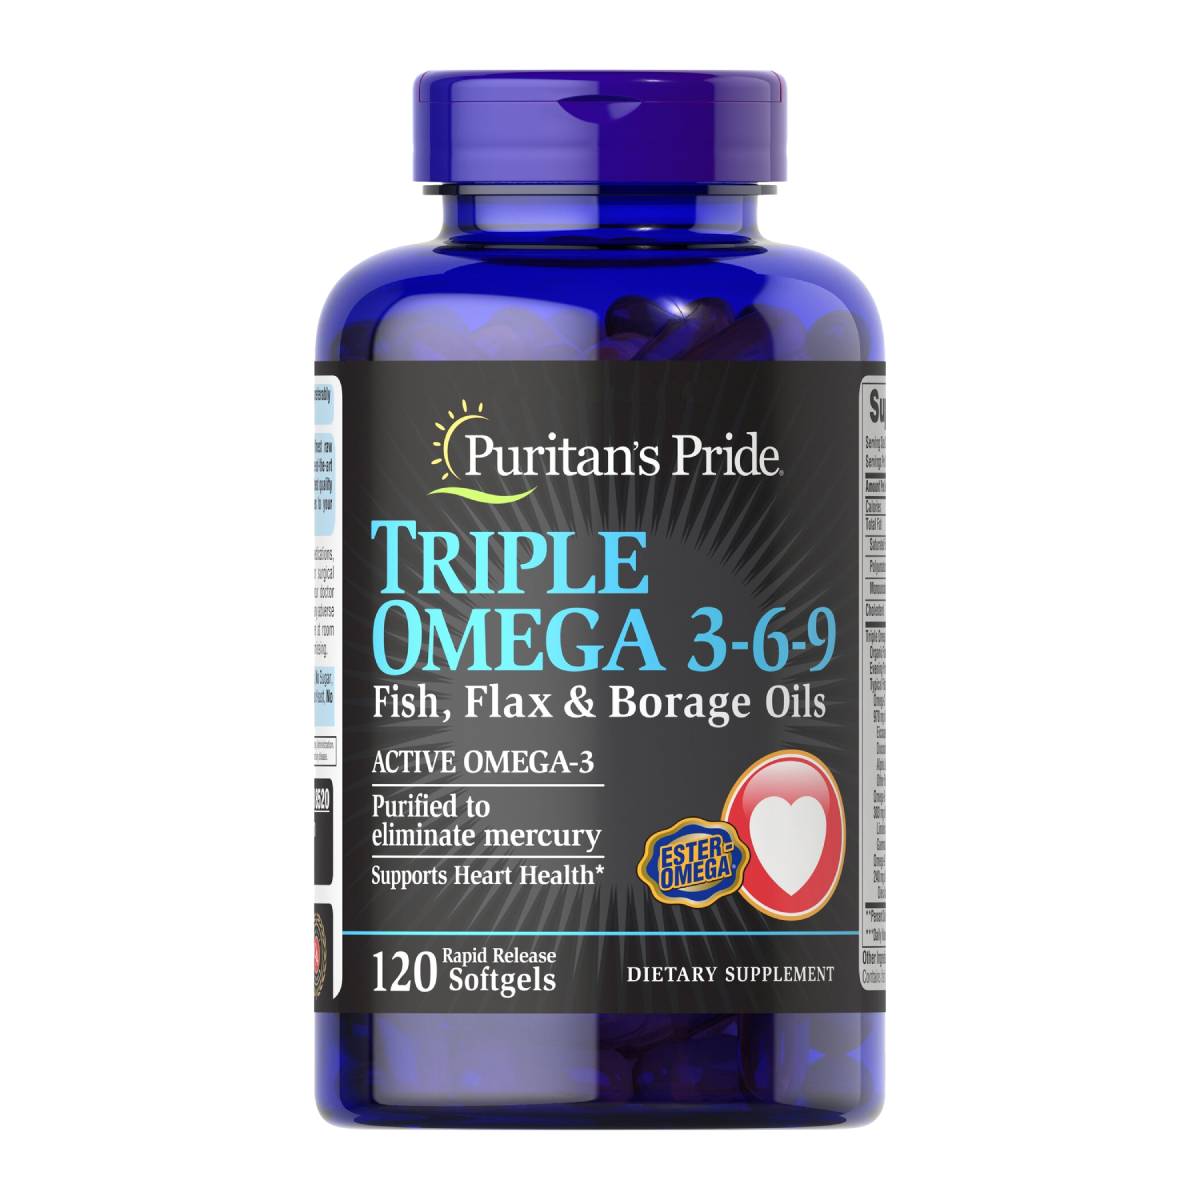 Puritan's Pride, Triple Omega 3-6-9 Fish, Flax & Borage Oils